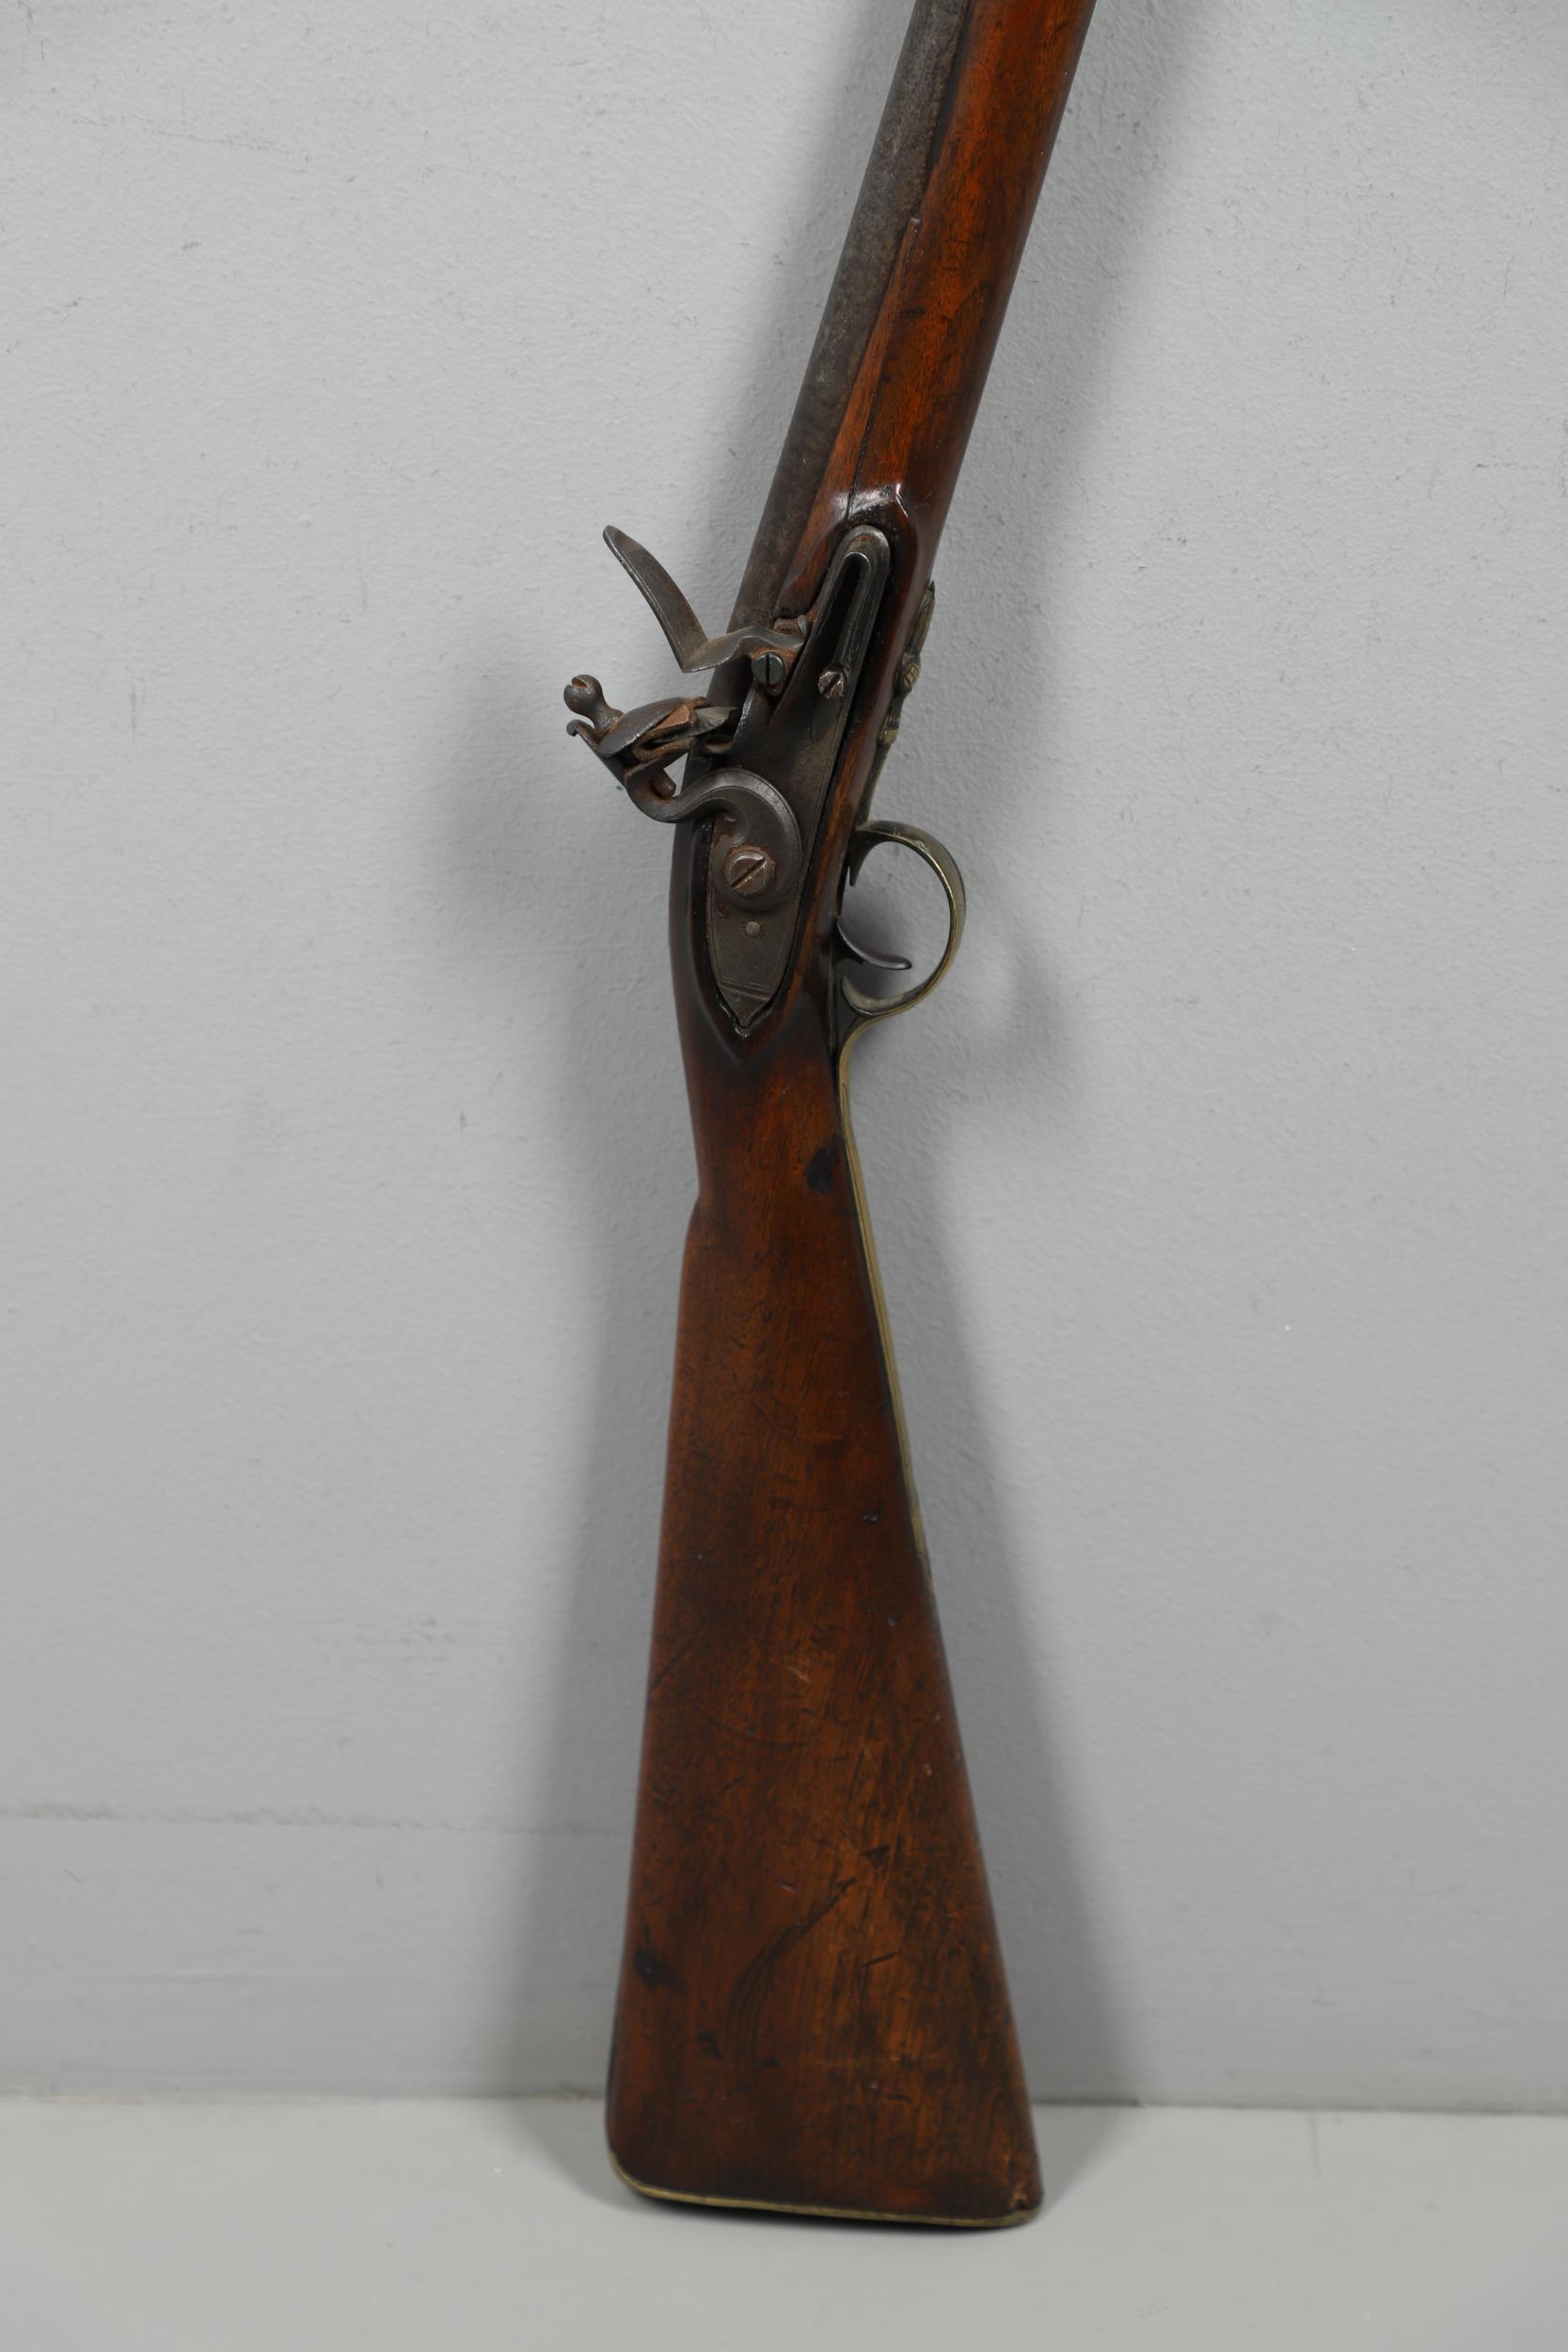 A LATE 18TH CENTURY FLINTLOCK GUN BY MORRIS. - Image 5 of 8